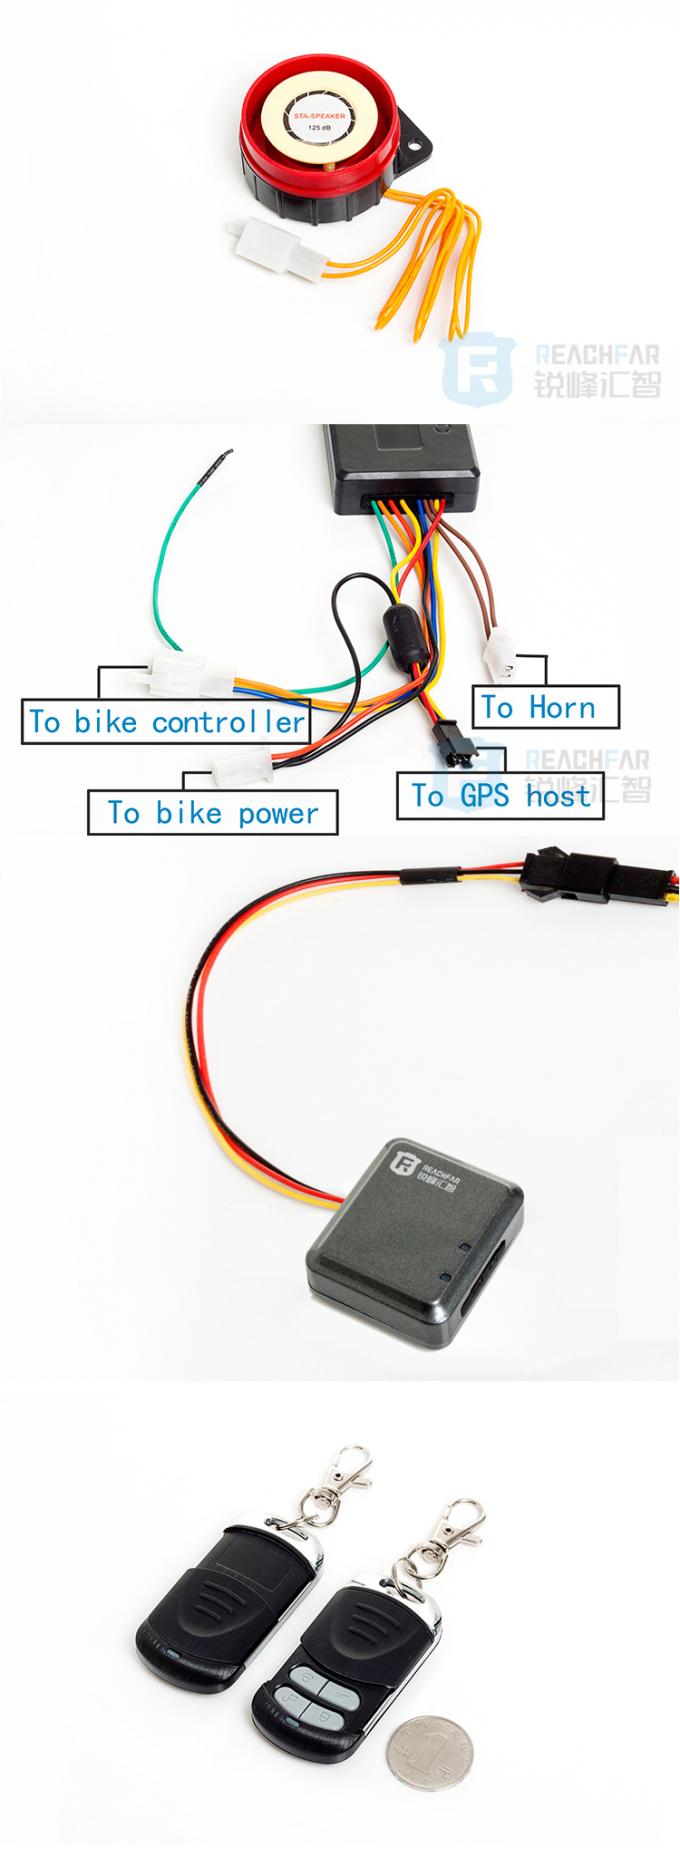 o perseguidor reachfar de GPS da E-bicicleta de rf-v12+ apoia o controlo a distância, veículo de seguimento do tempo real GSM/GPRS